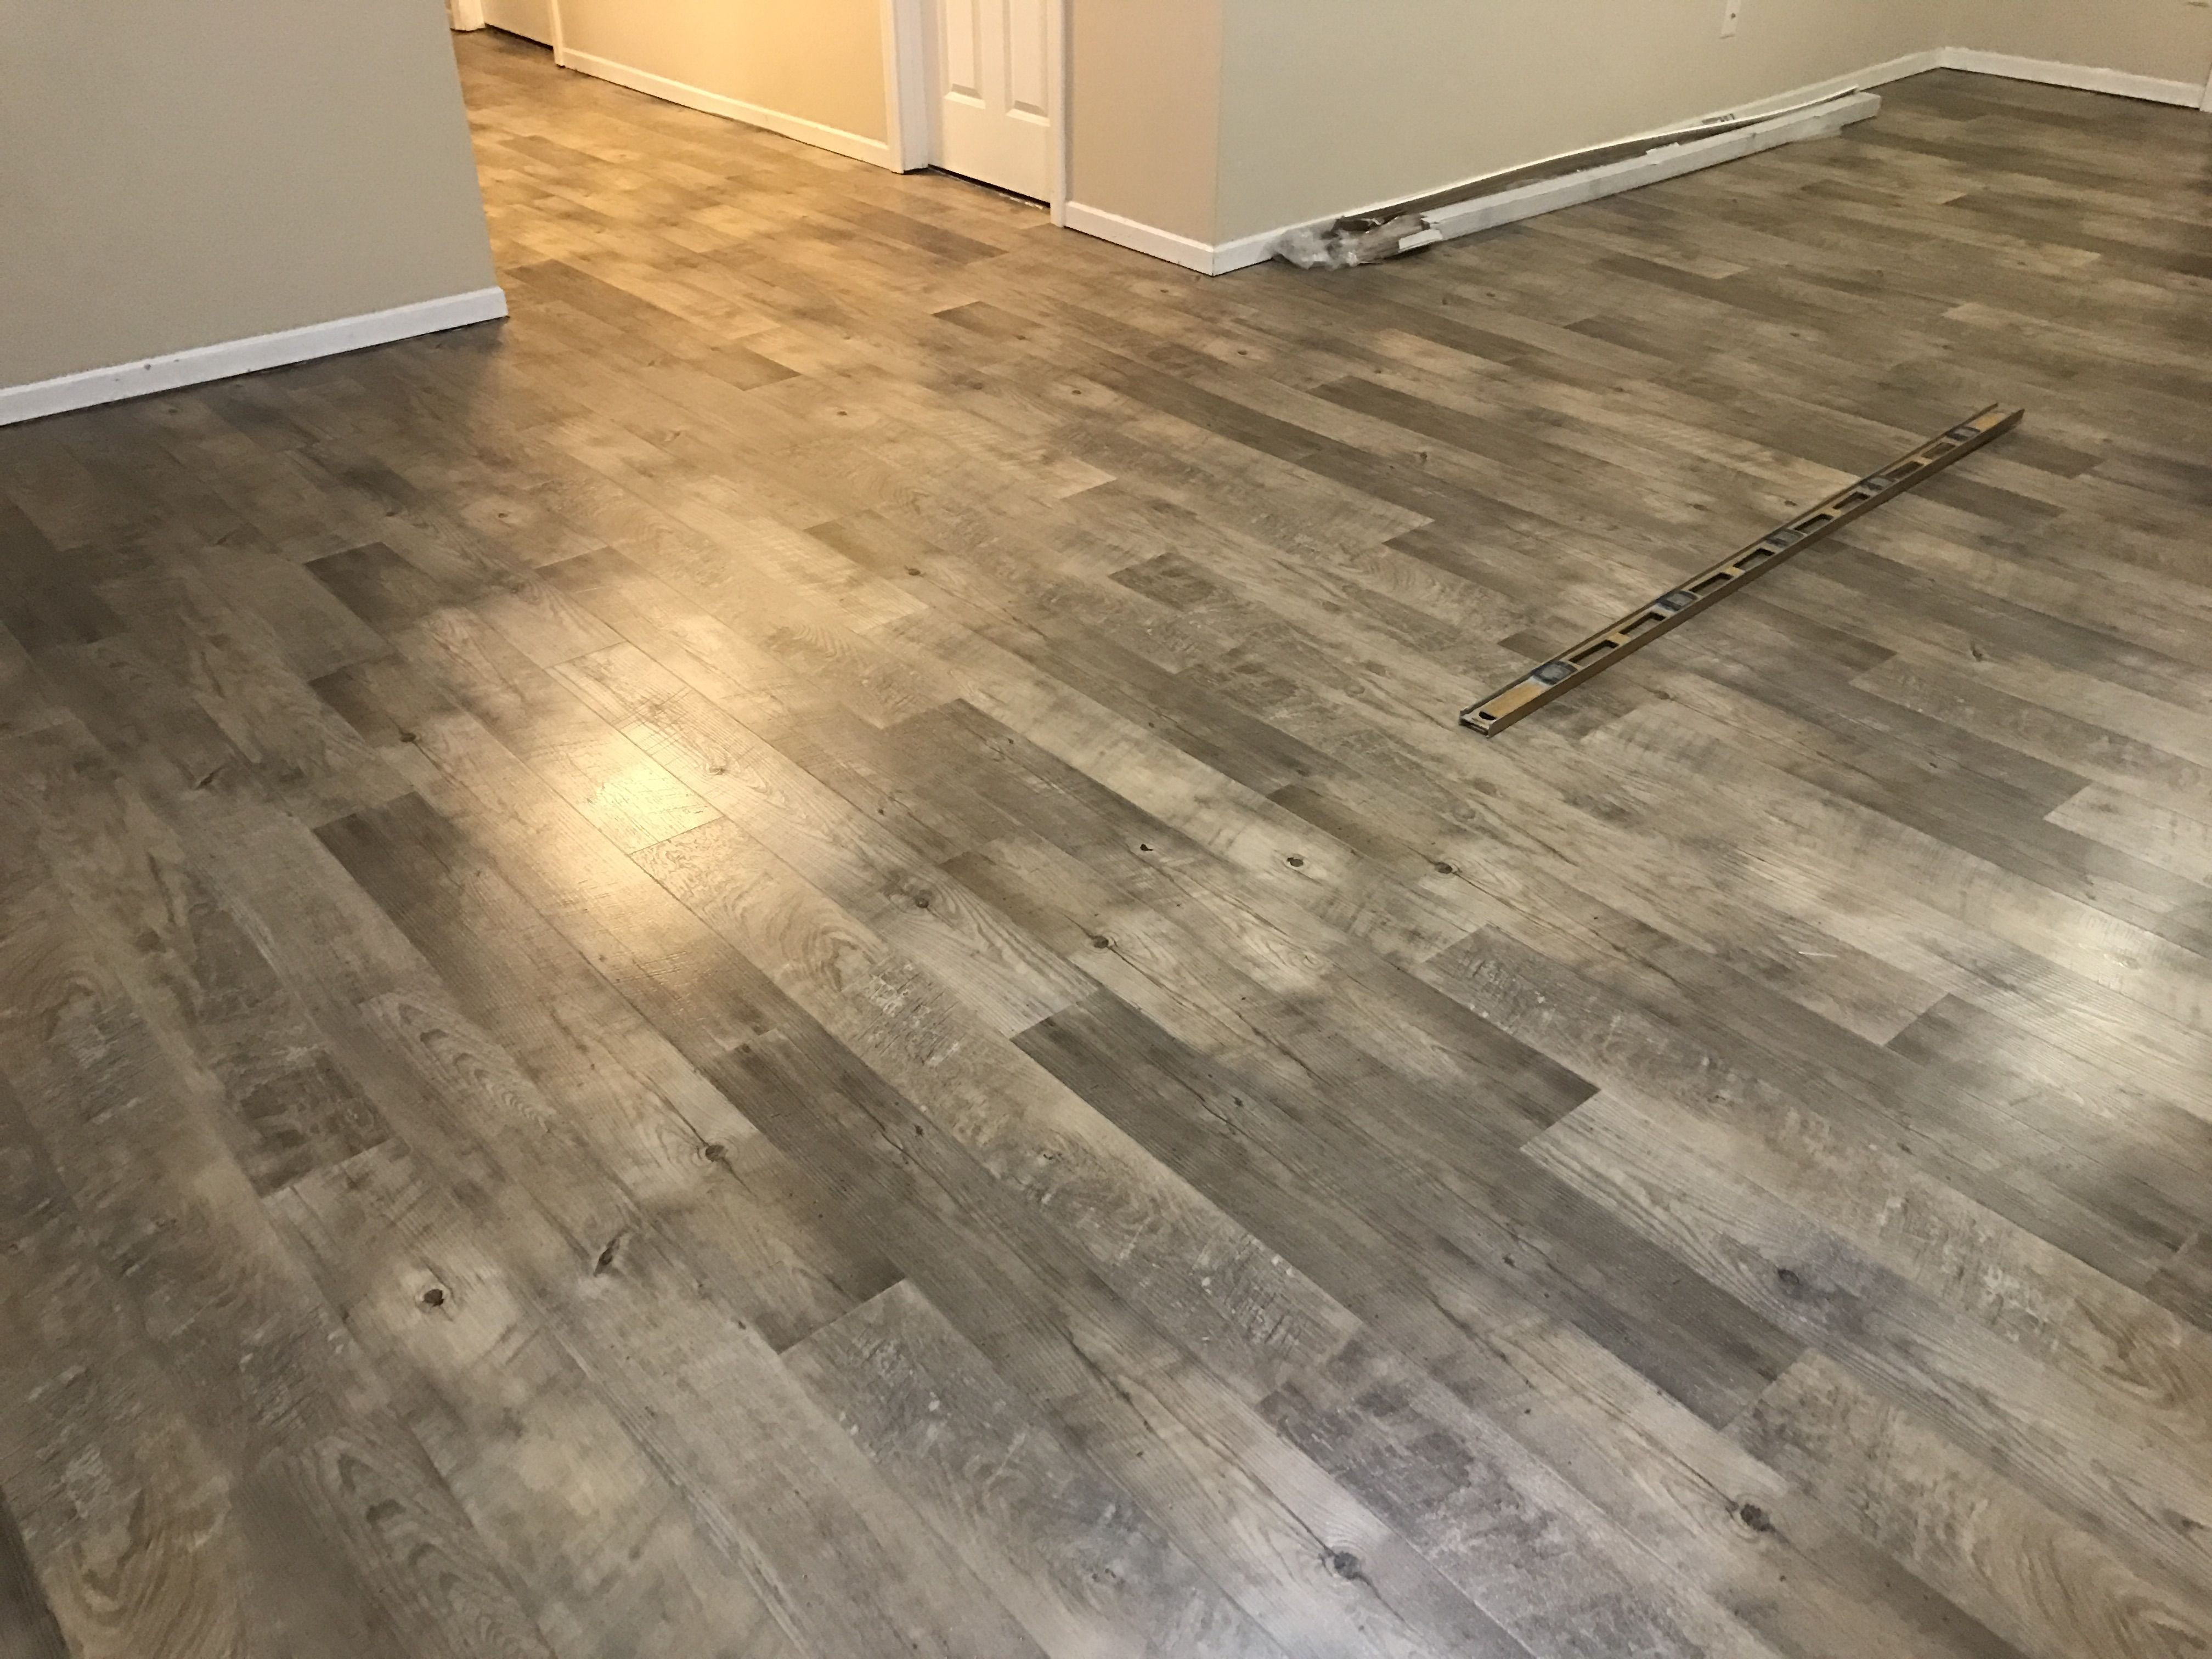 24 Lovely Hardwood Floor with Tile 2024 free download hardwood floor with tile of vinyl plan flooring unique tile that looks like hardwood floors for related post